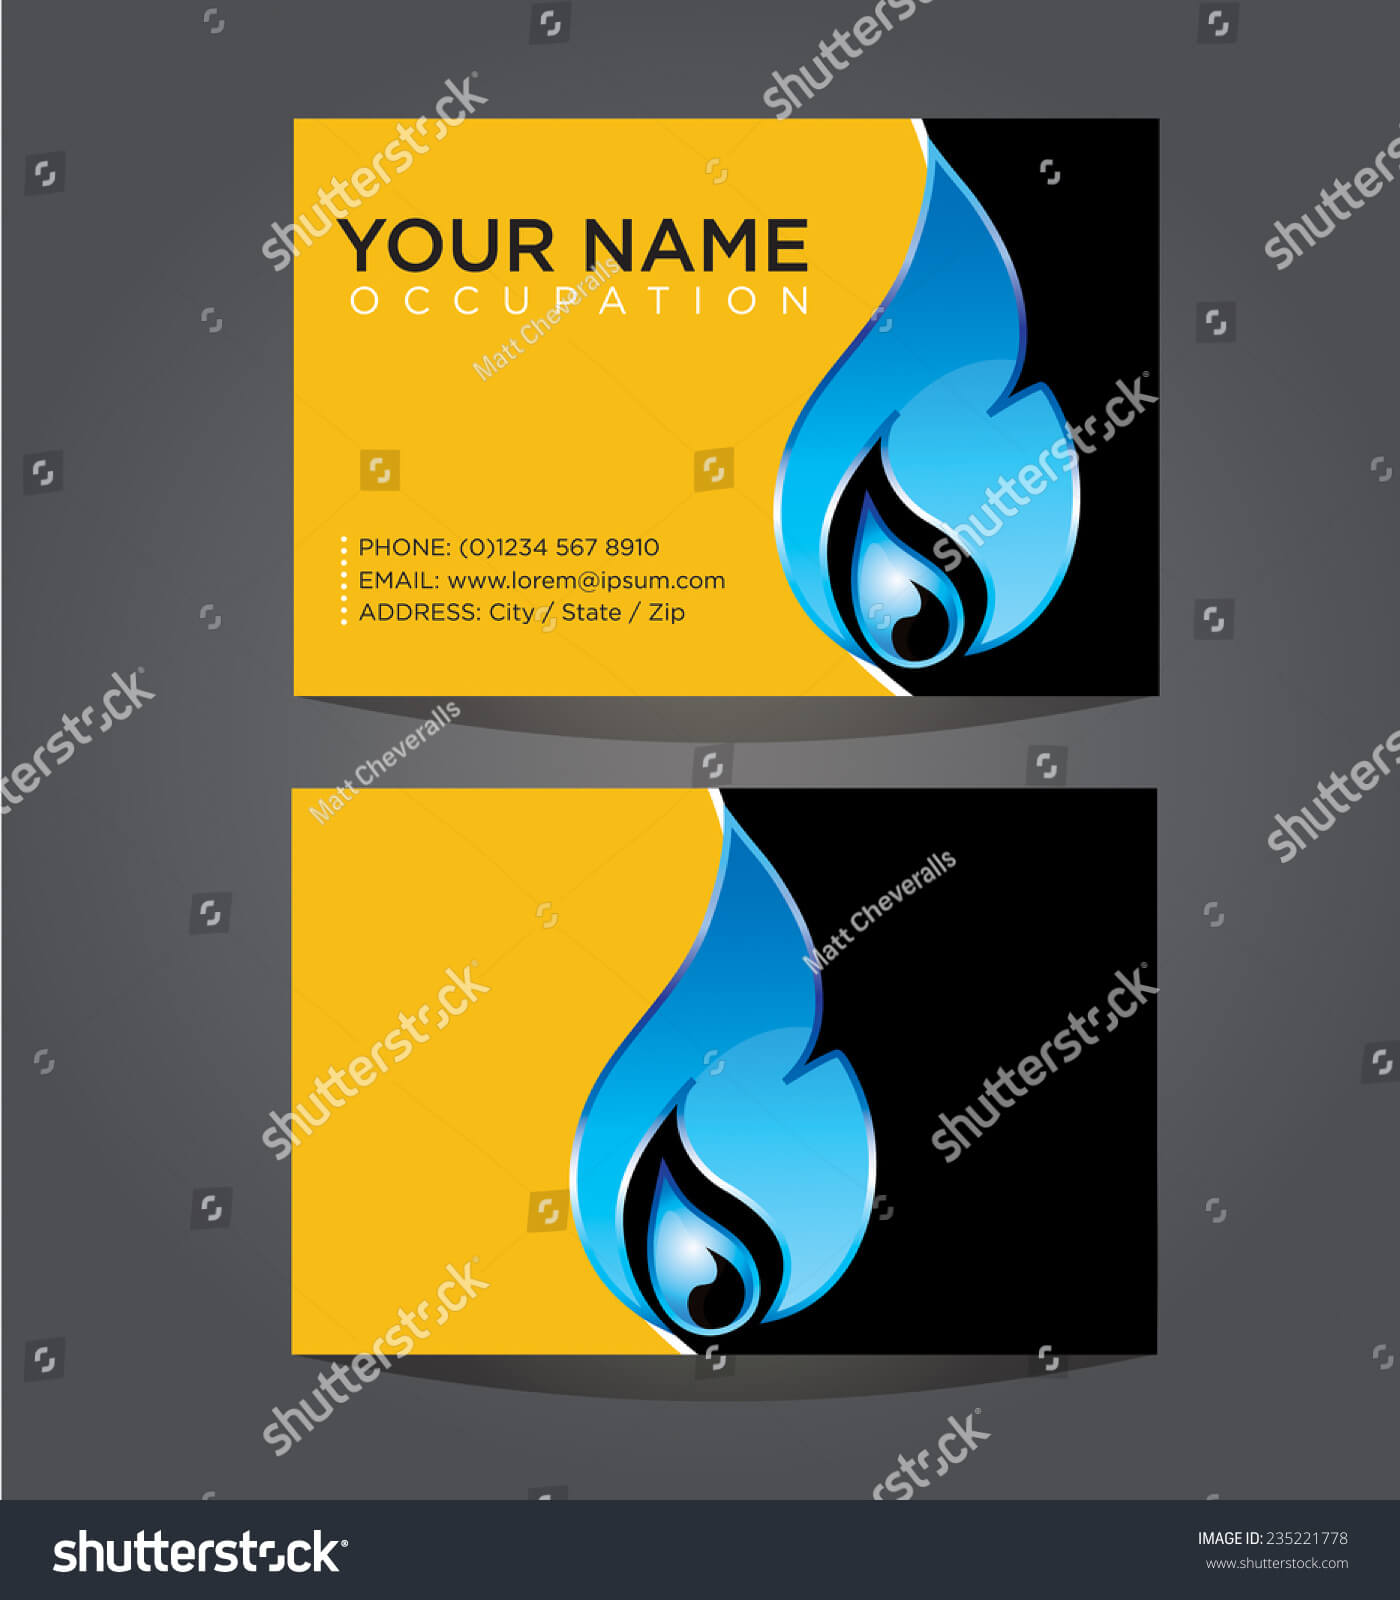 Business Card Template Plumbing Heating Air | Royalty Free Within Hvac Business Card Template